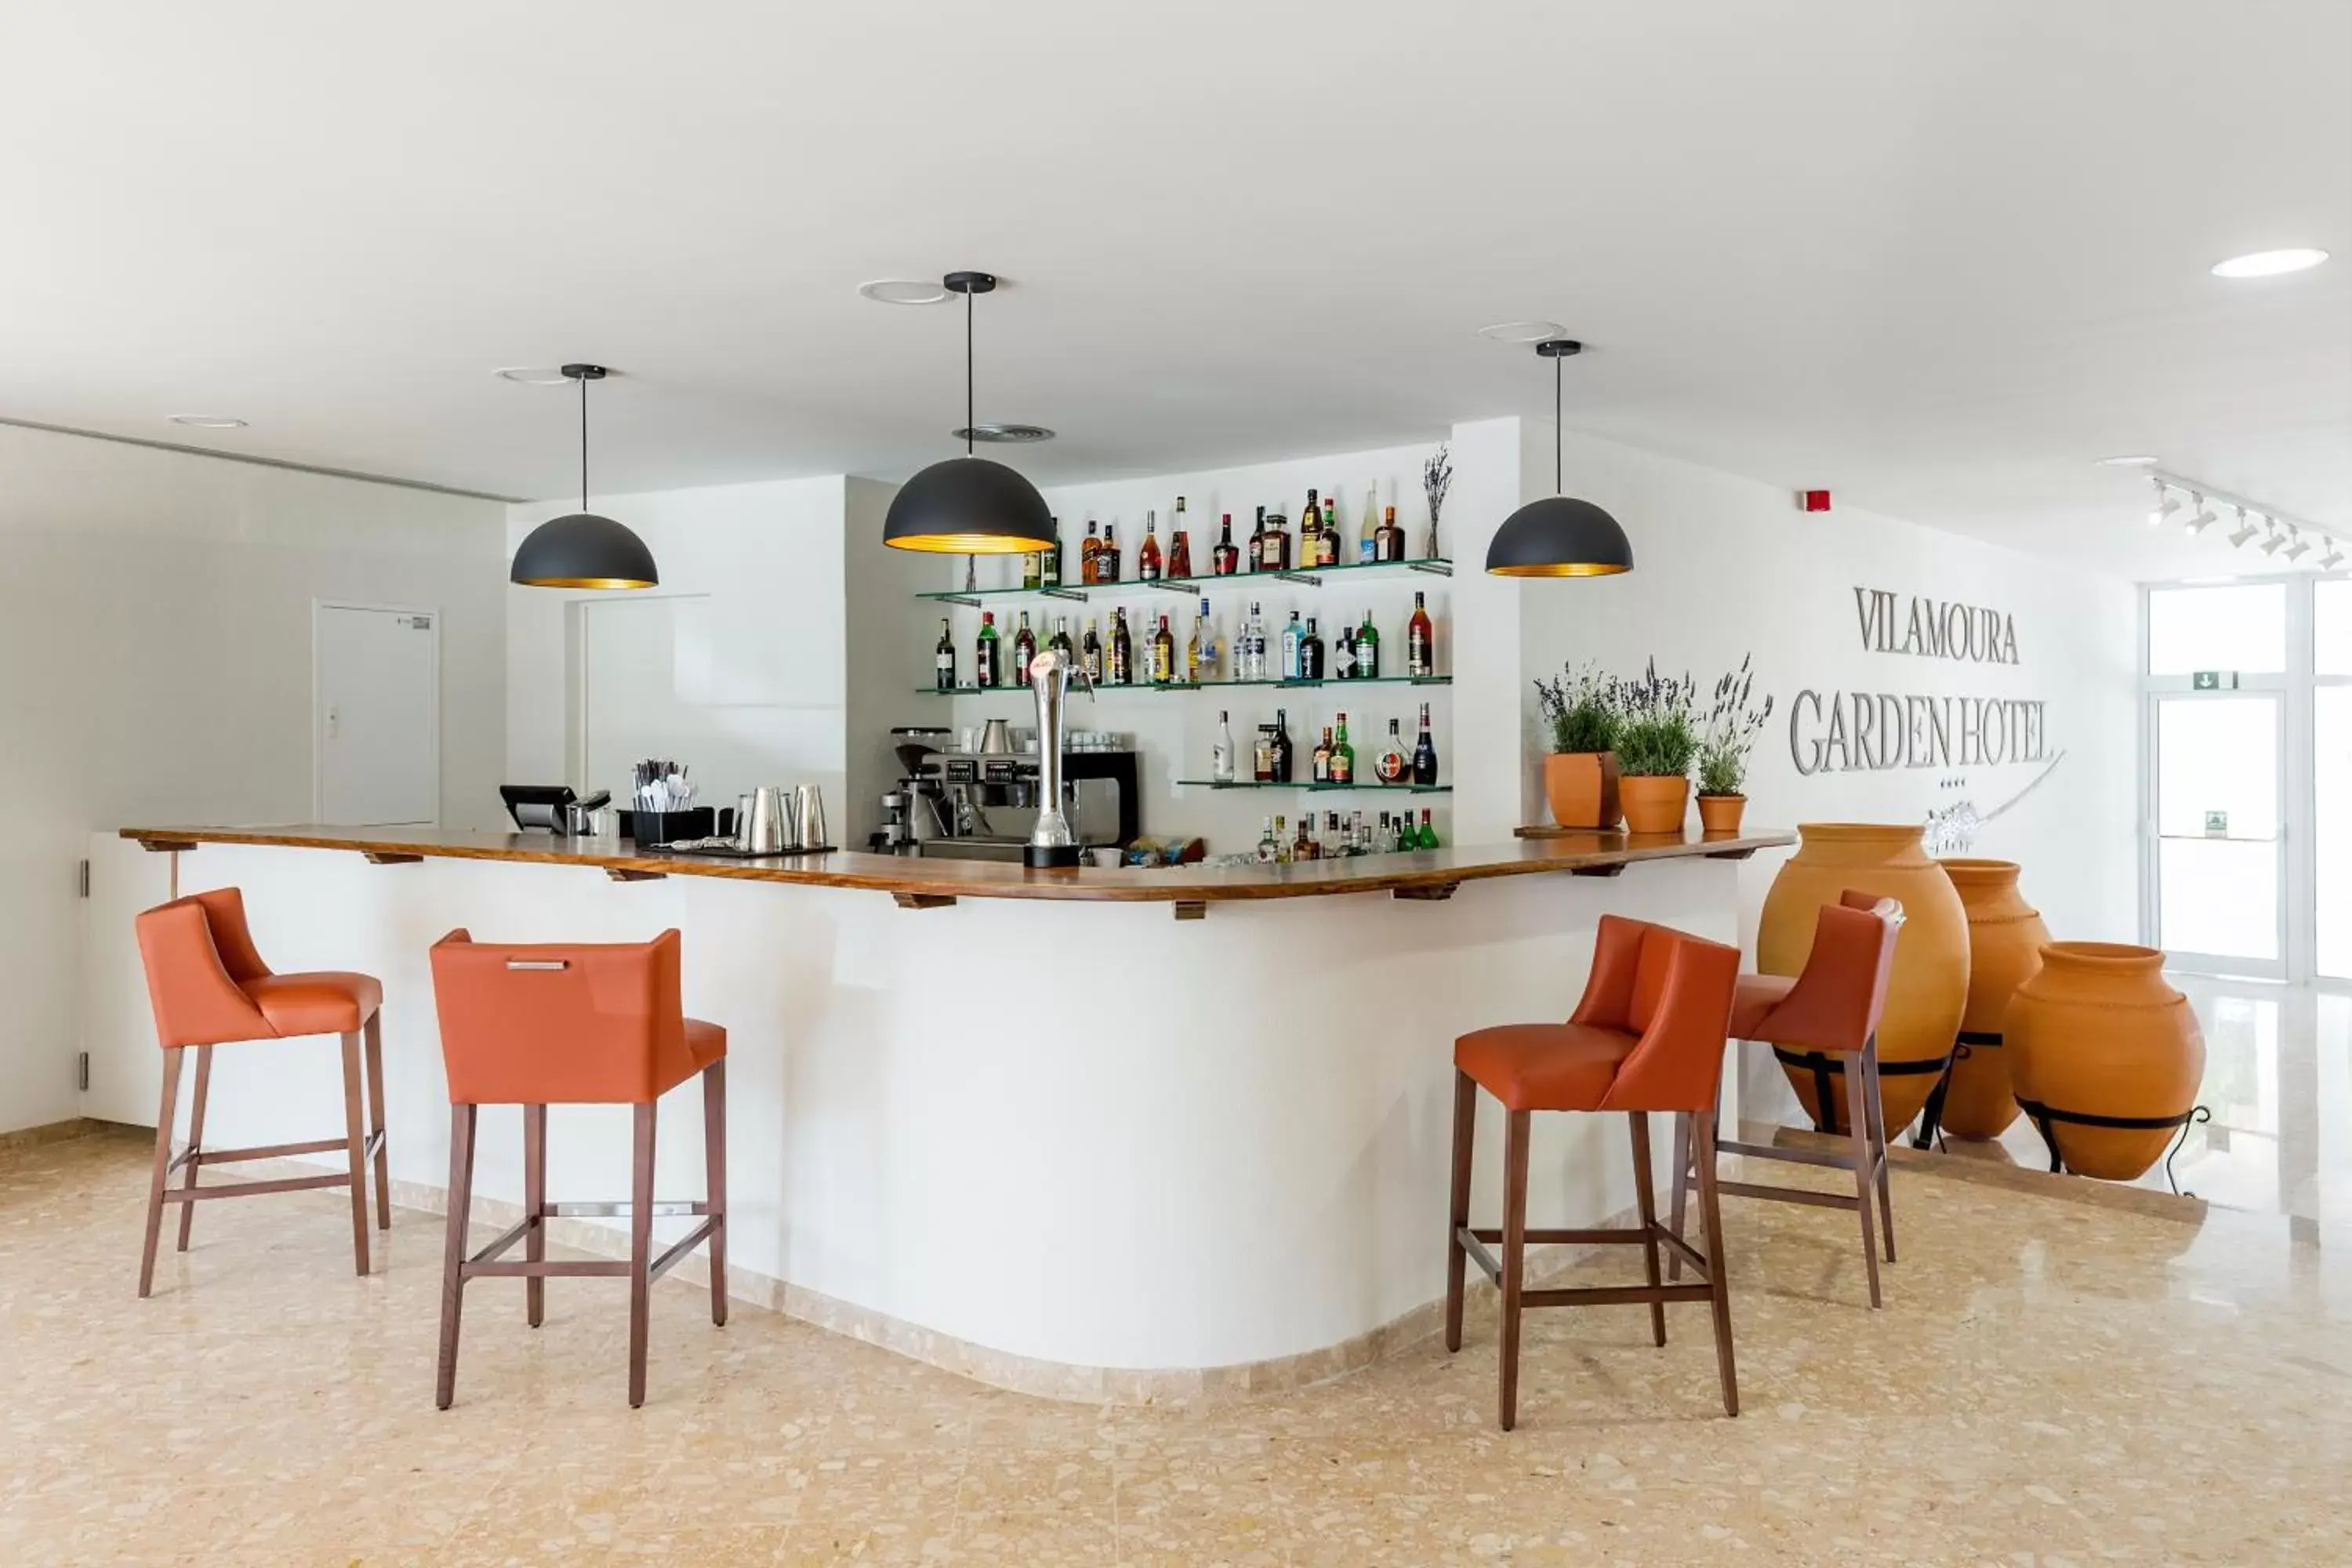 Property building, Lounge/Bar in Vilamoura Garden Hotel